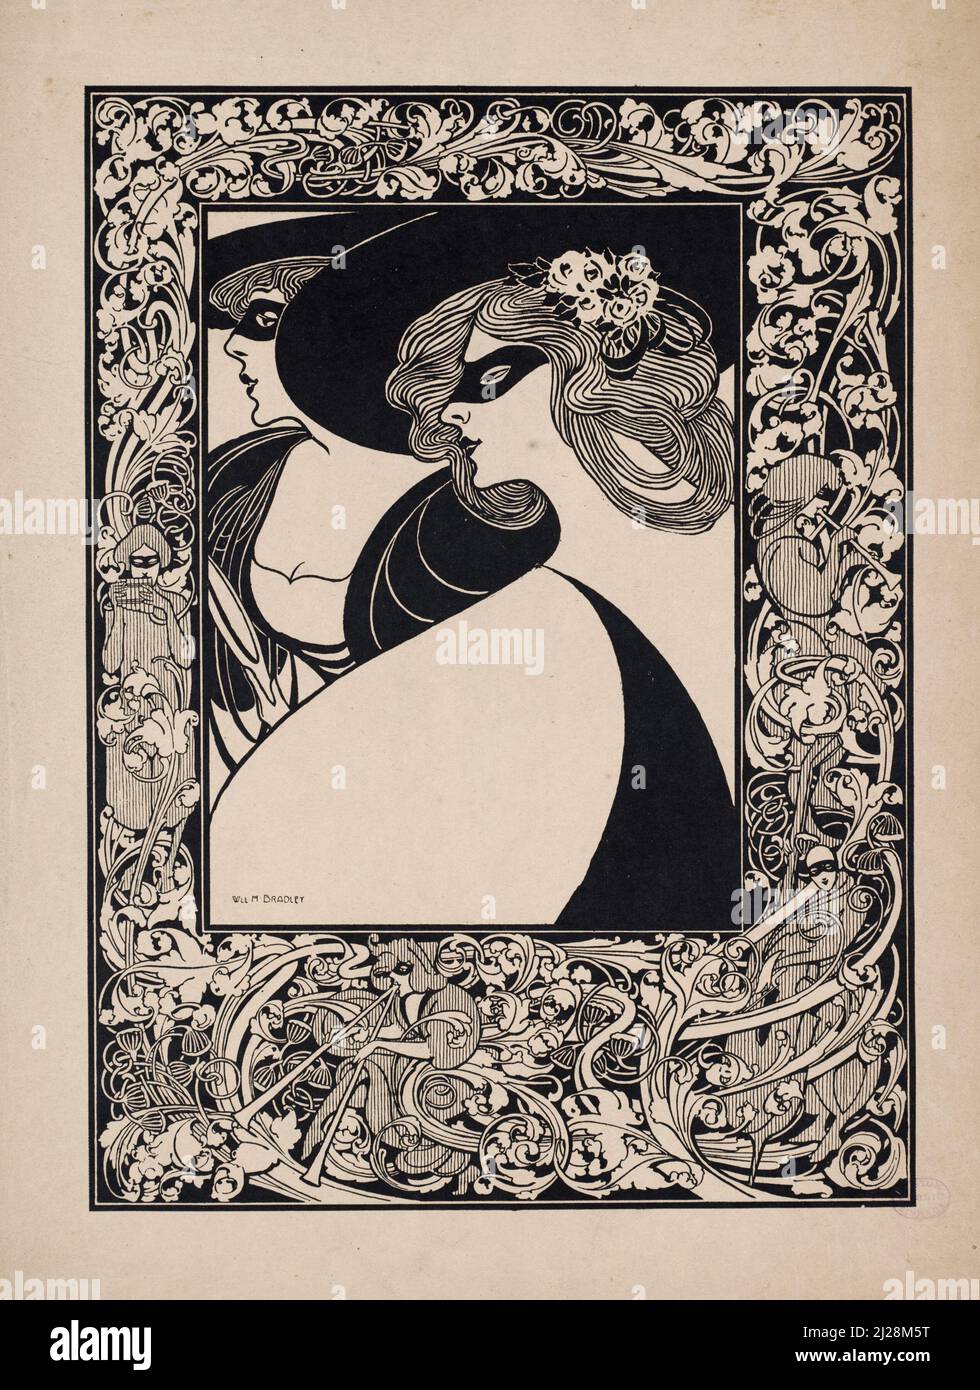 Will Bradley Artwork - Two Masked Women (1890-1920) American Art Nouveau - Old and vintage Poster / Magazine Cover in schwarz und weiß. Stockfoto